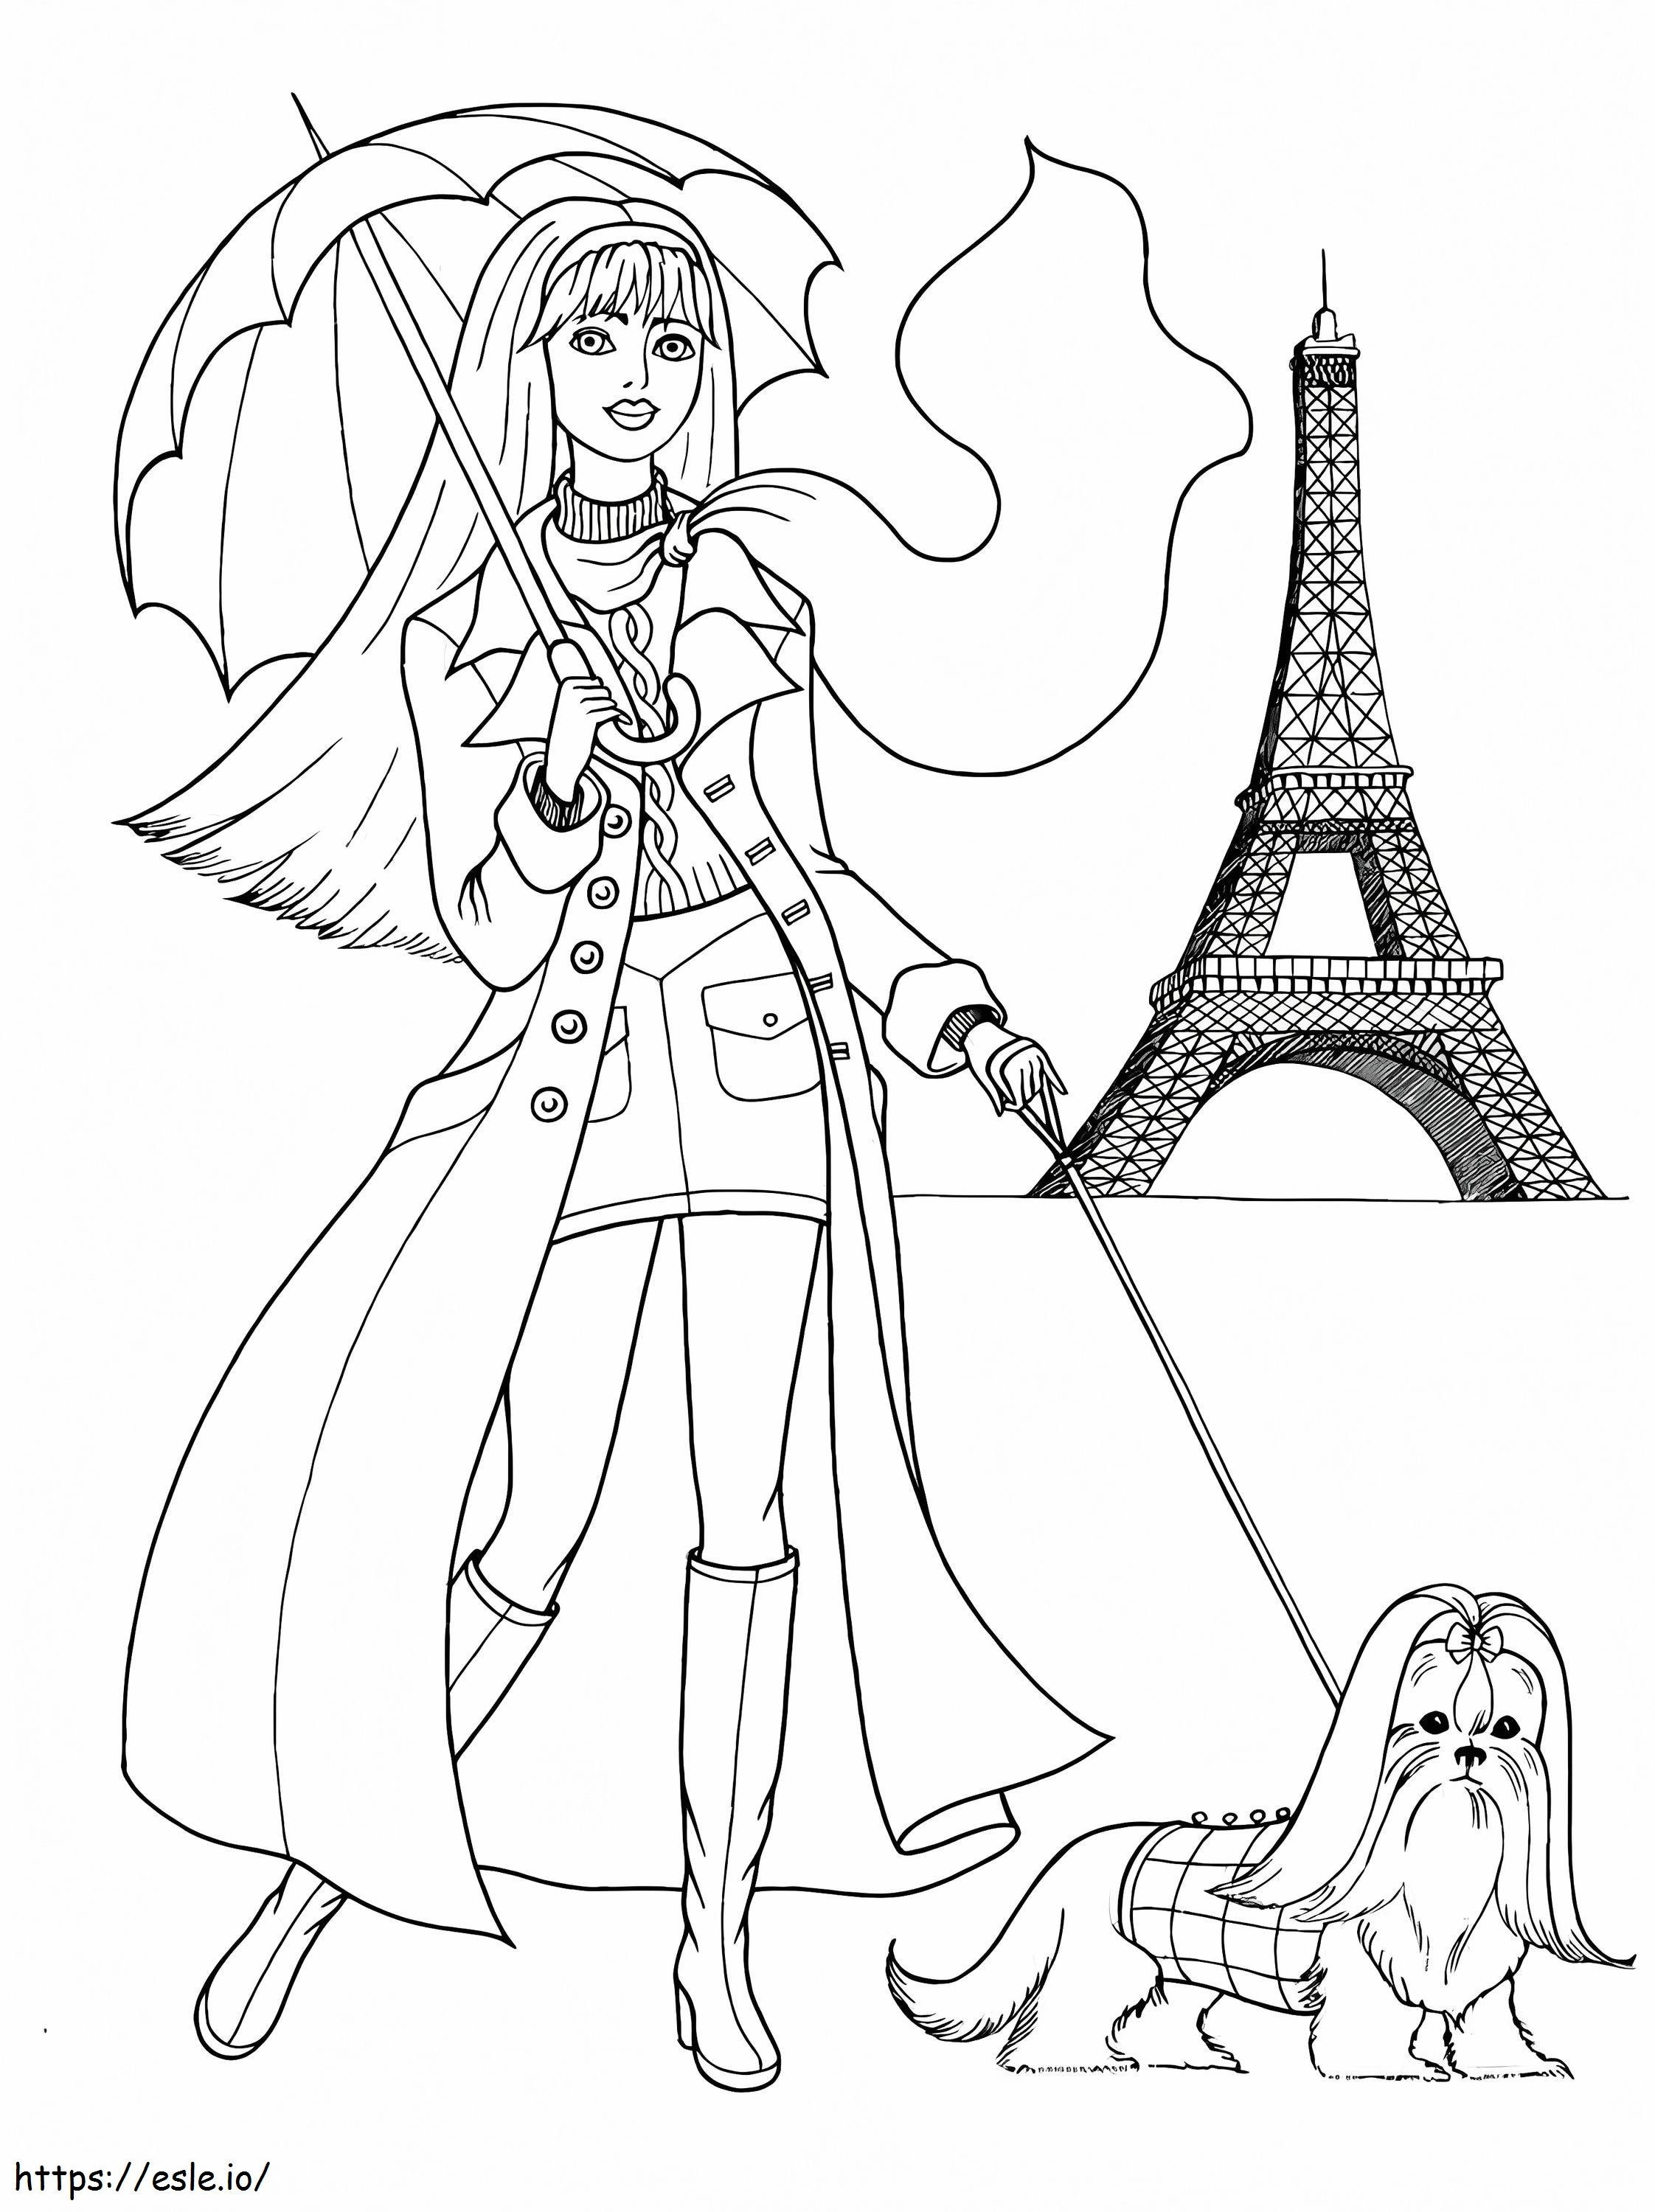 Paris Teenage Girl coloring page